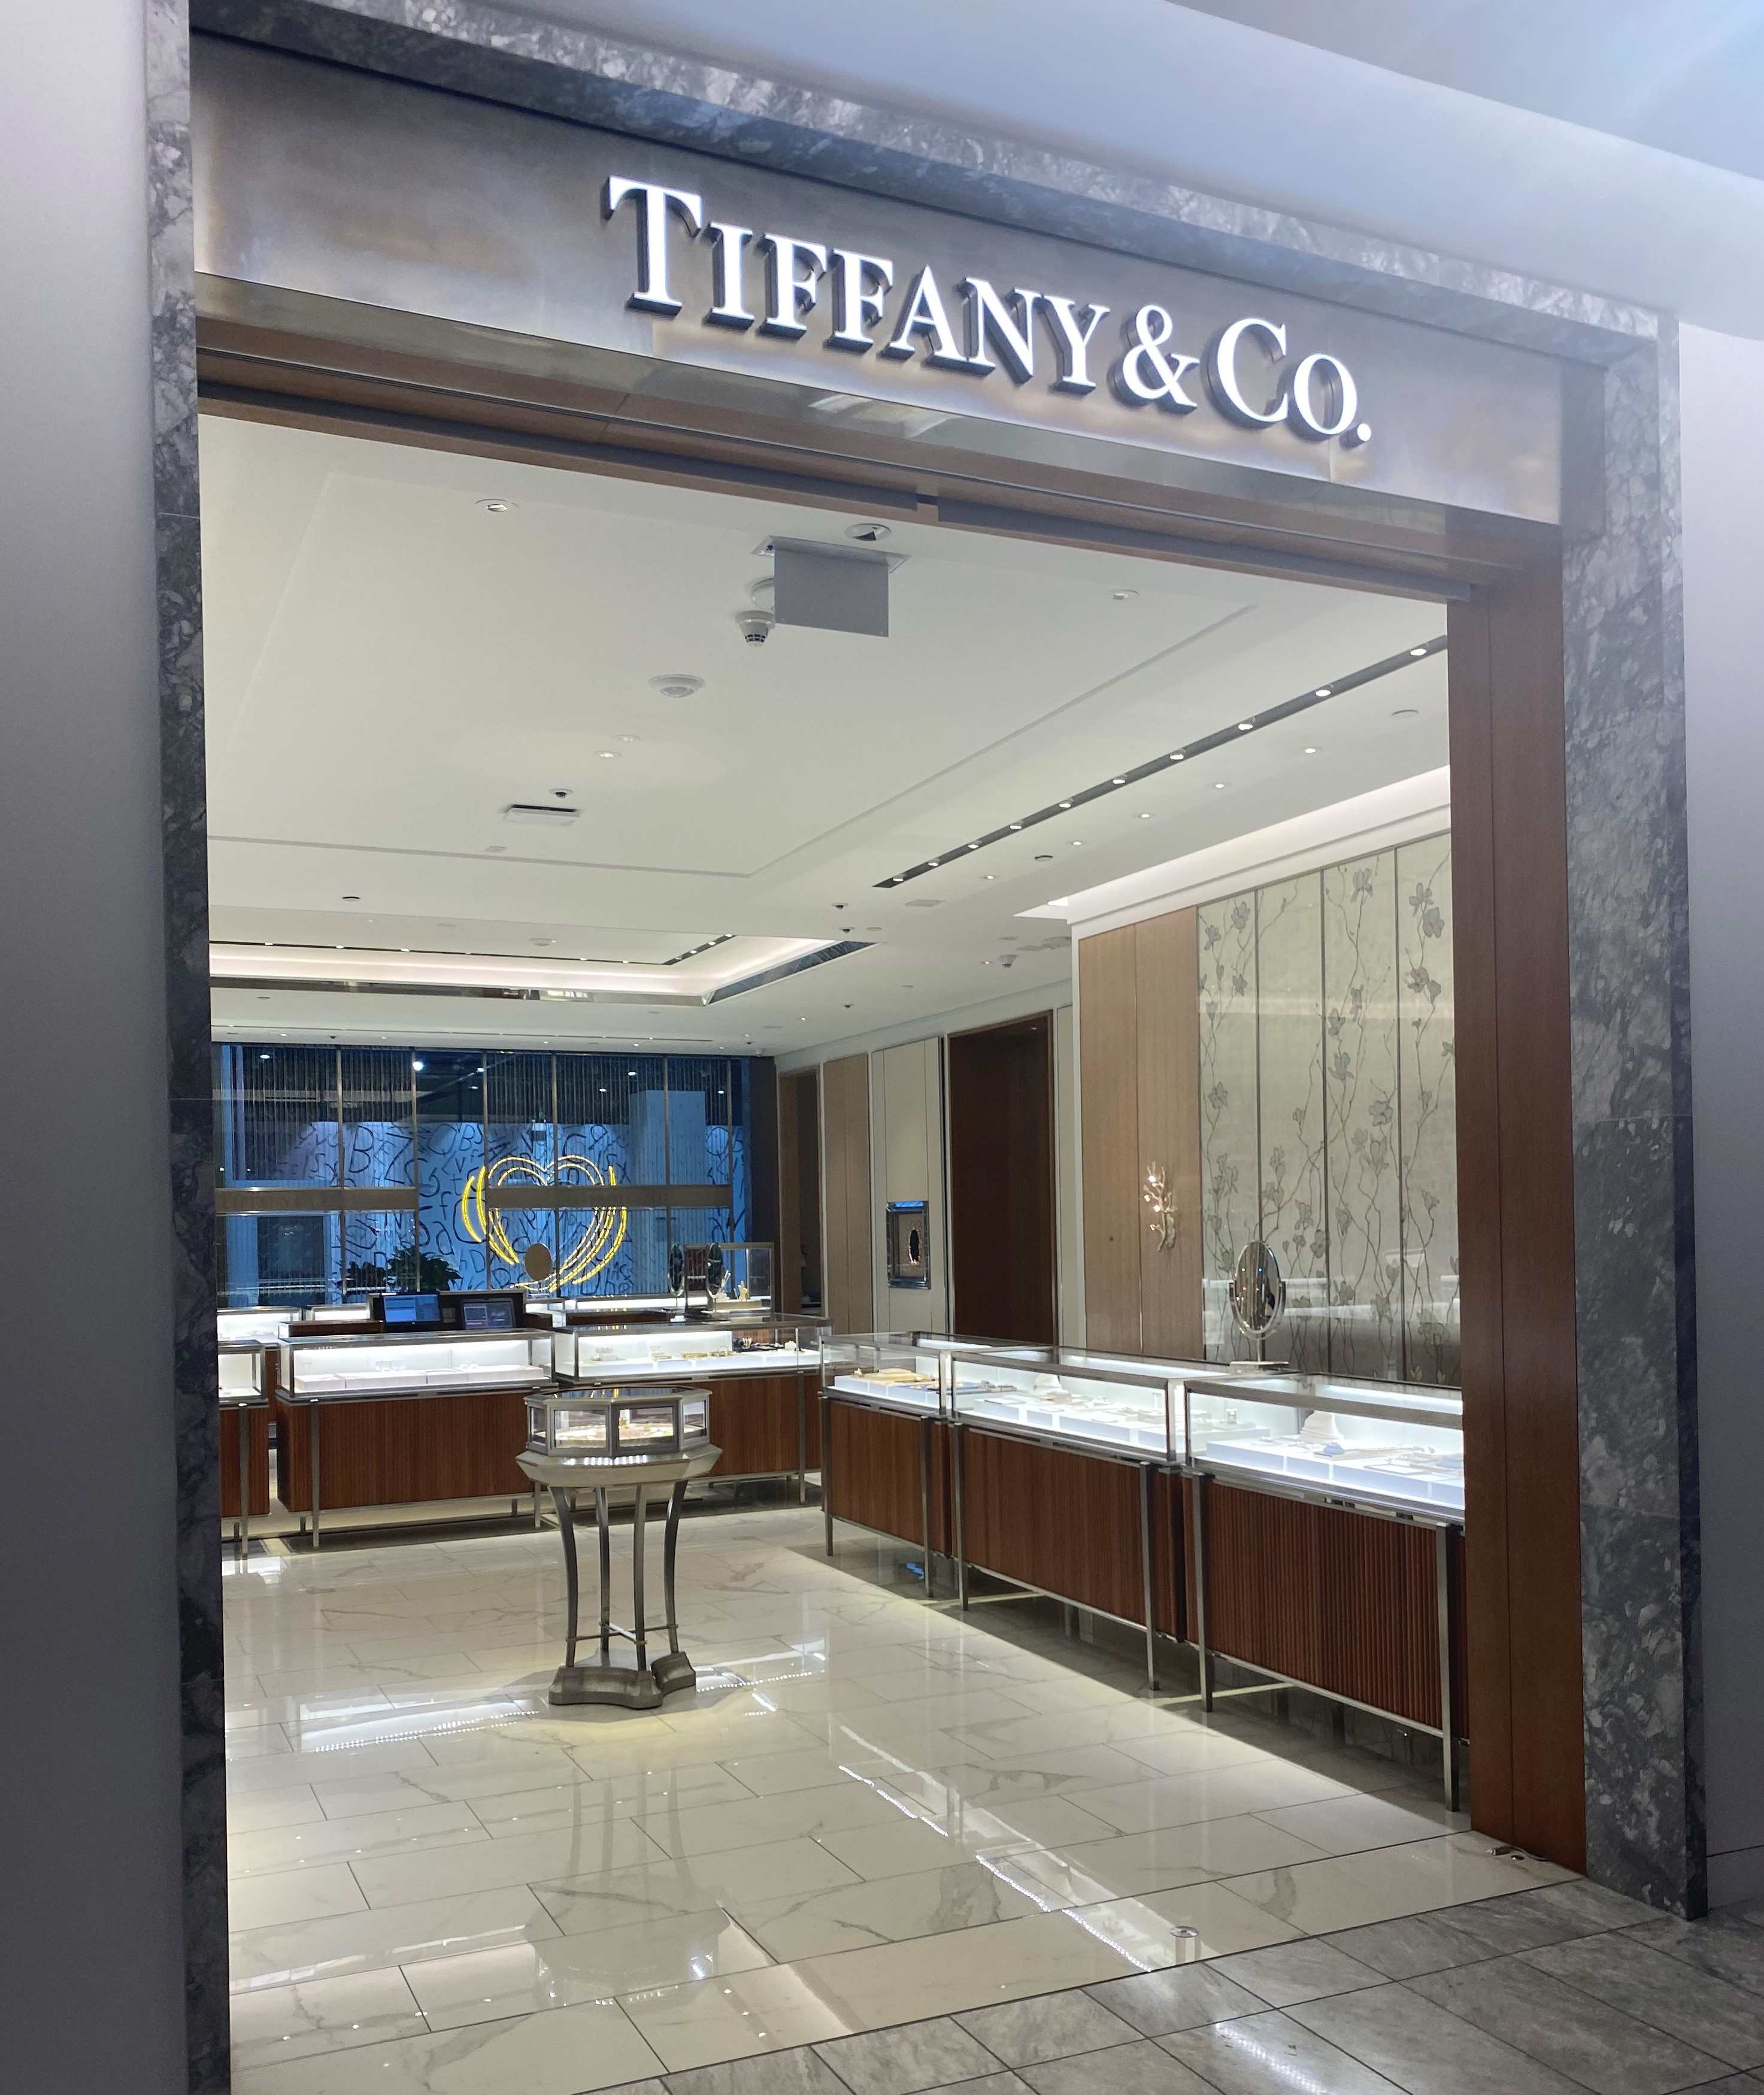 Tiffany & Co. Mississauga (905)897-4359